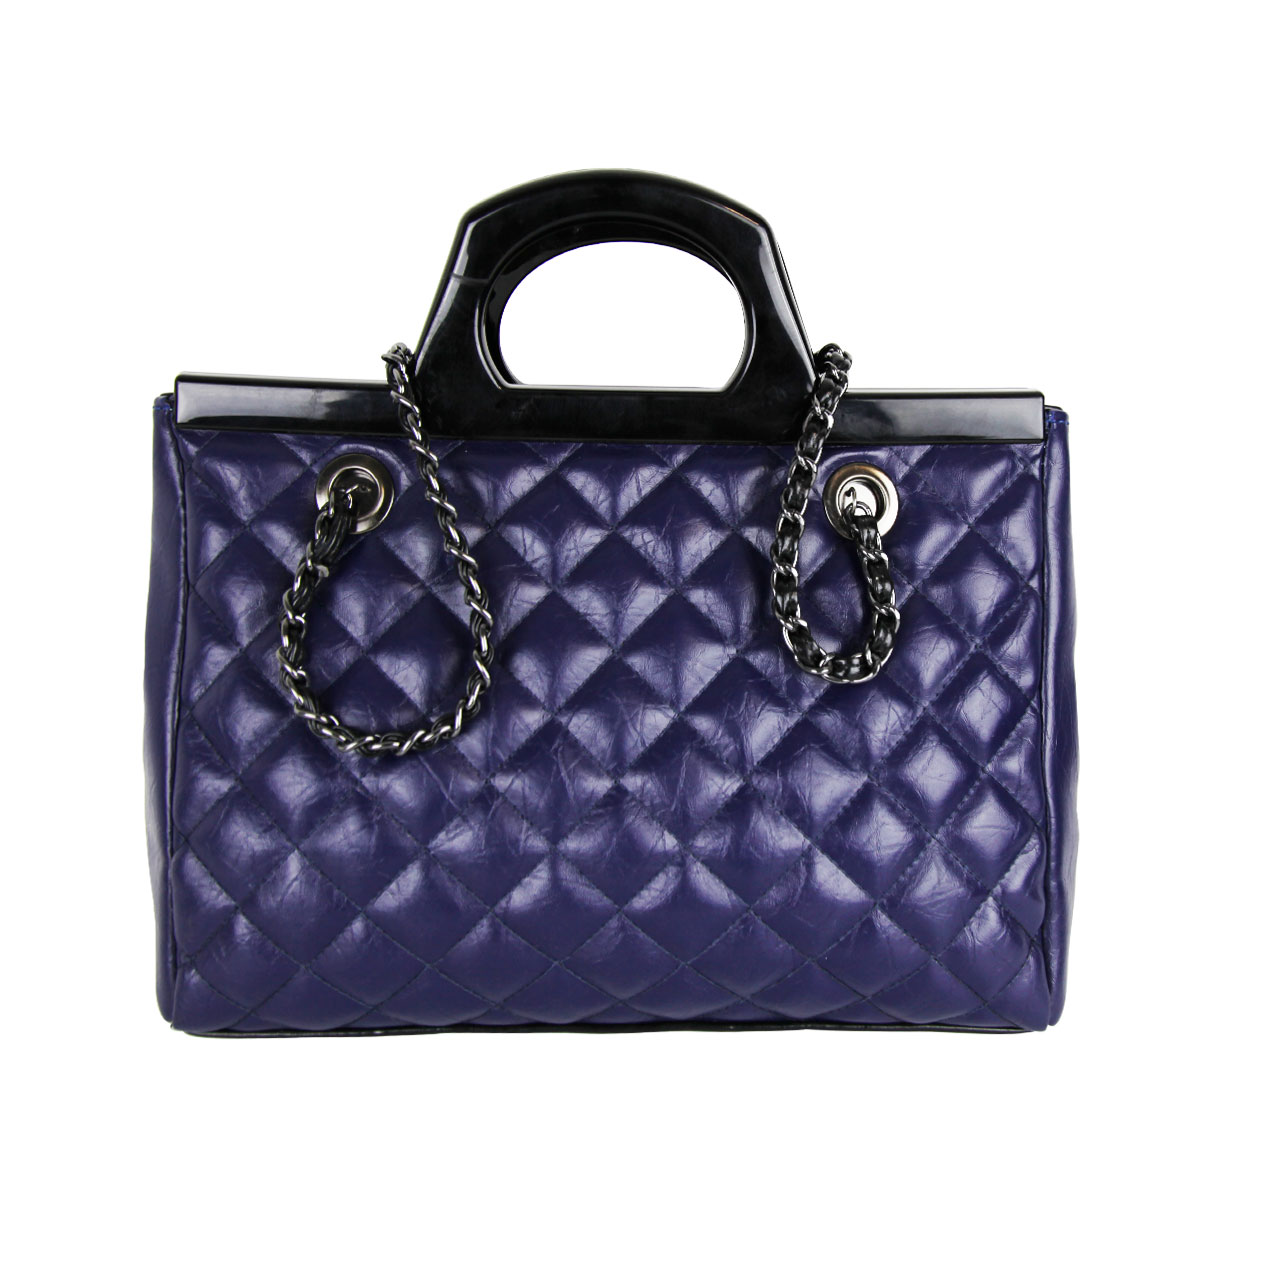 Classic Flip Top Handle Women's Blue / Black Satchels Bag With Chain Strap